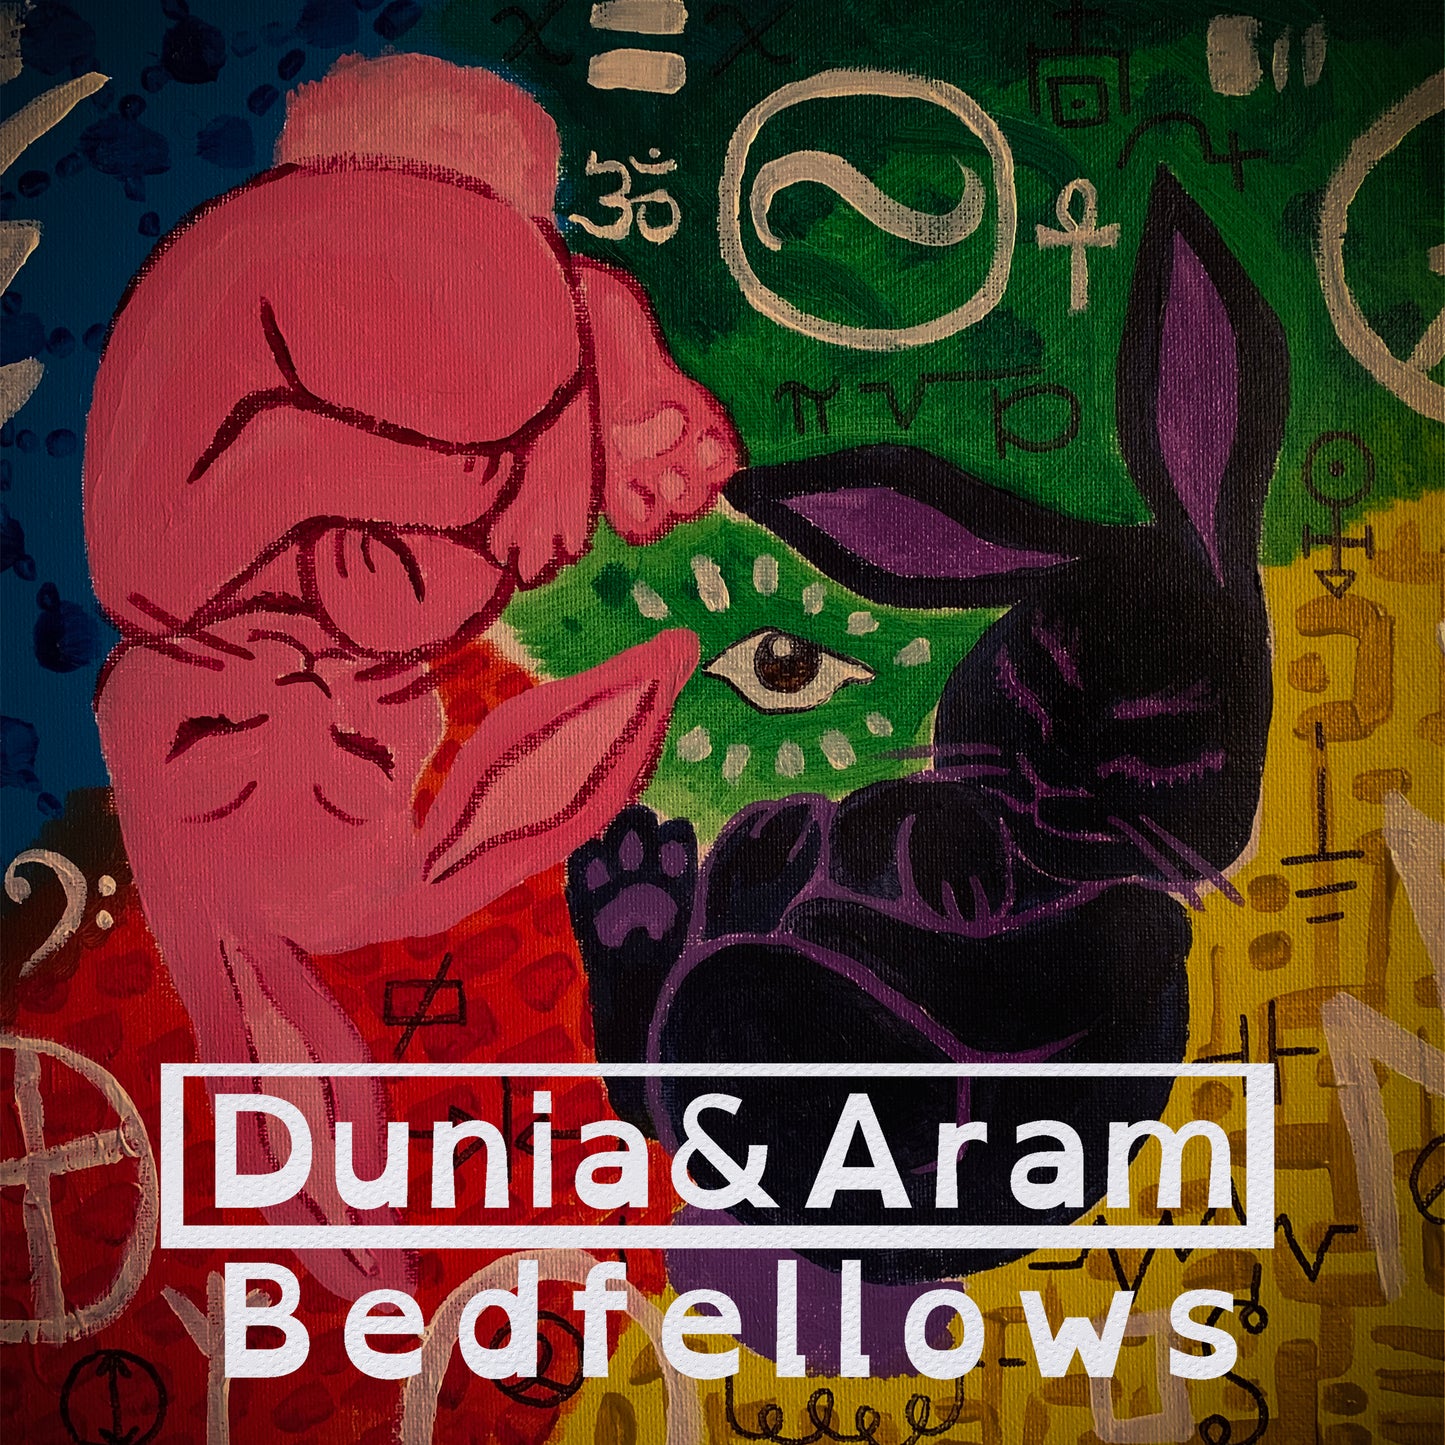 Dunia & Aram - "Bedfellows" (LP, Vinyl)